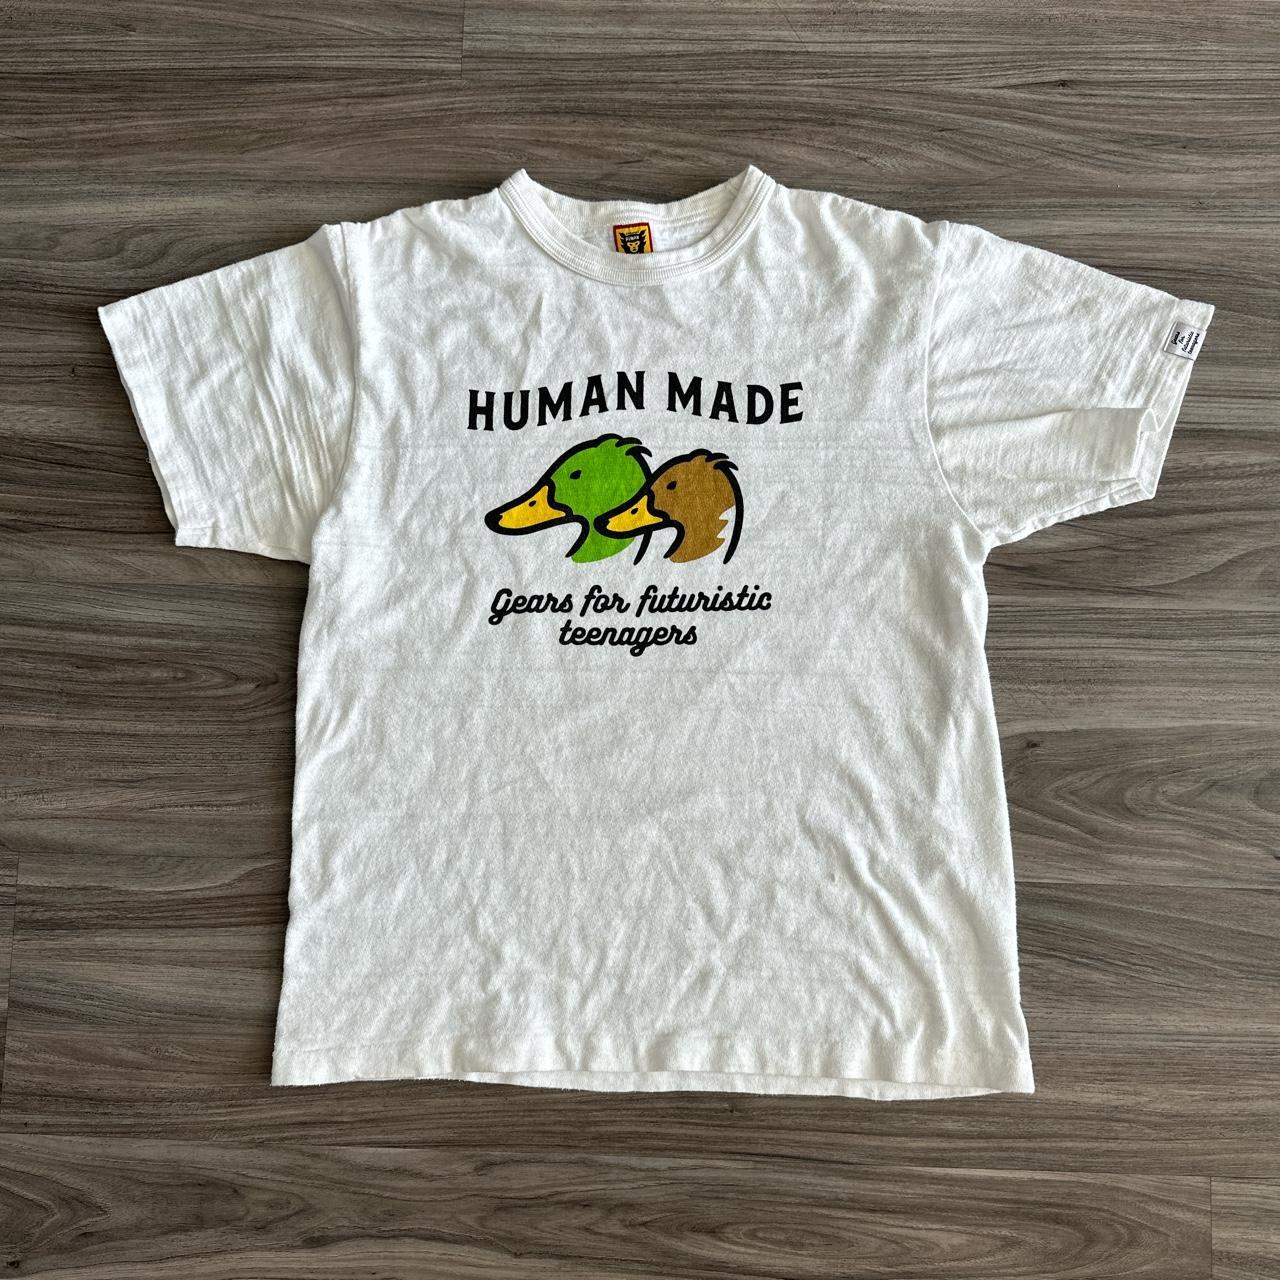 Human Made Men's White and Black T-shirt